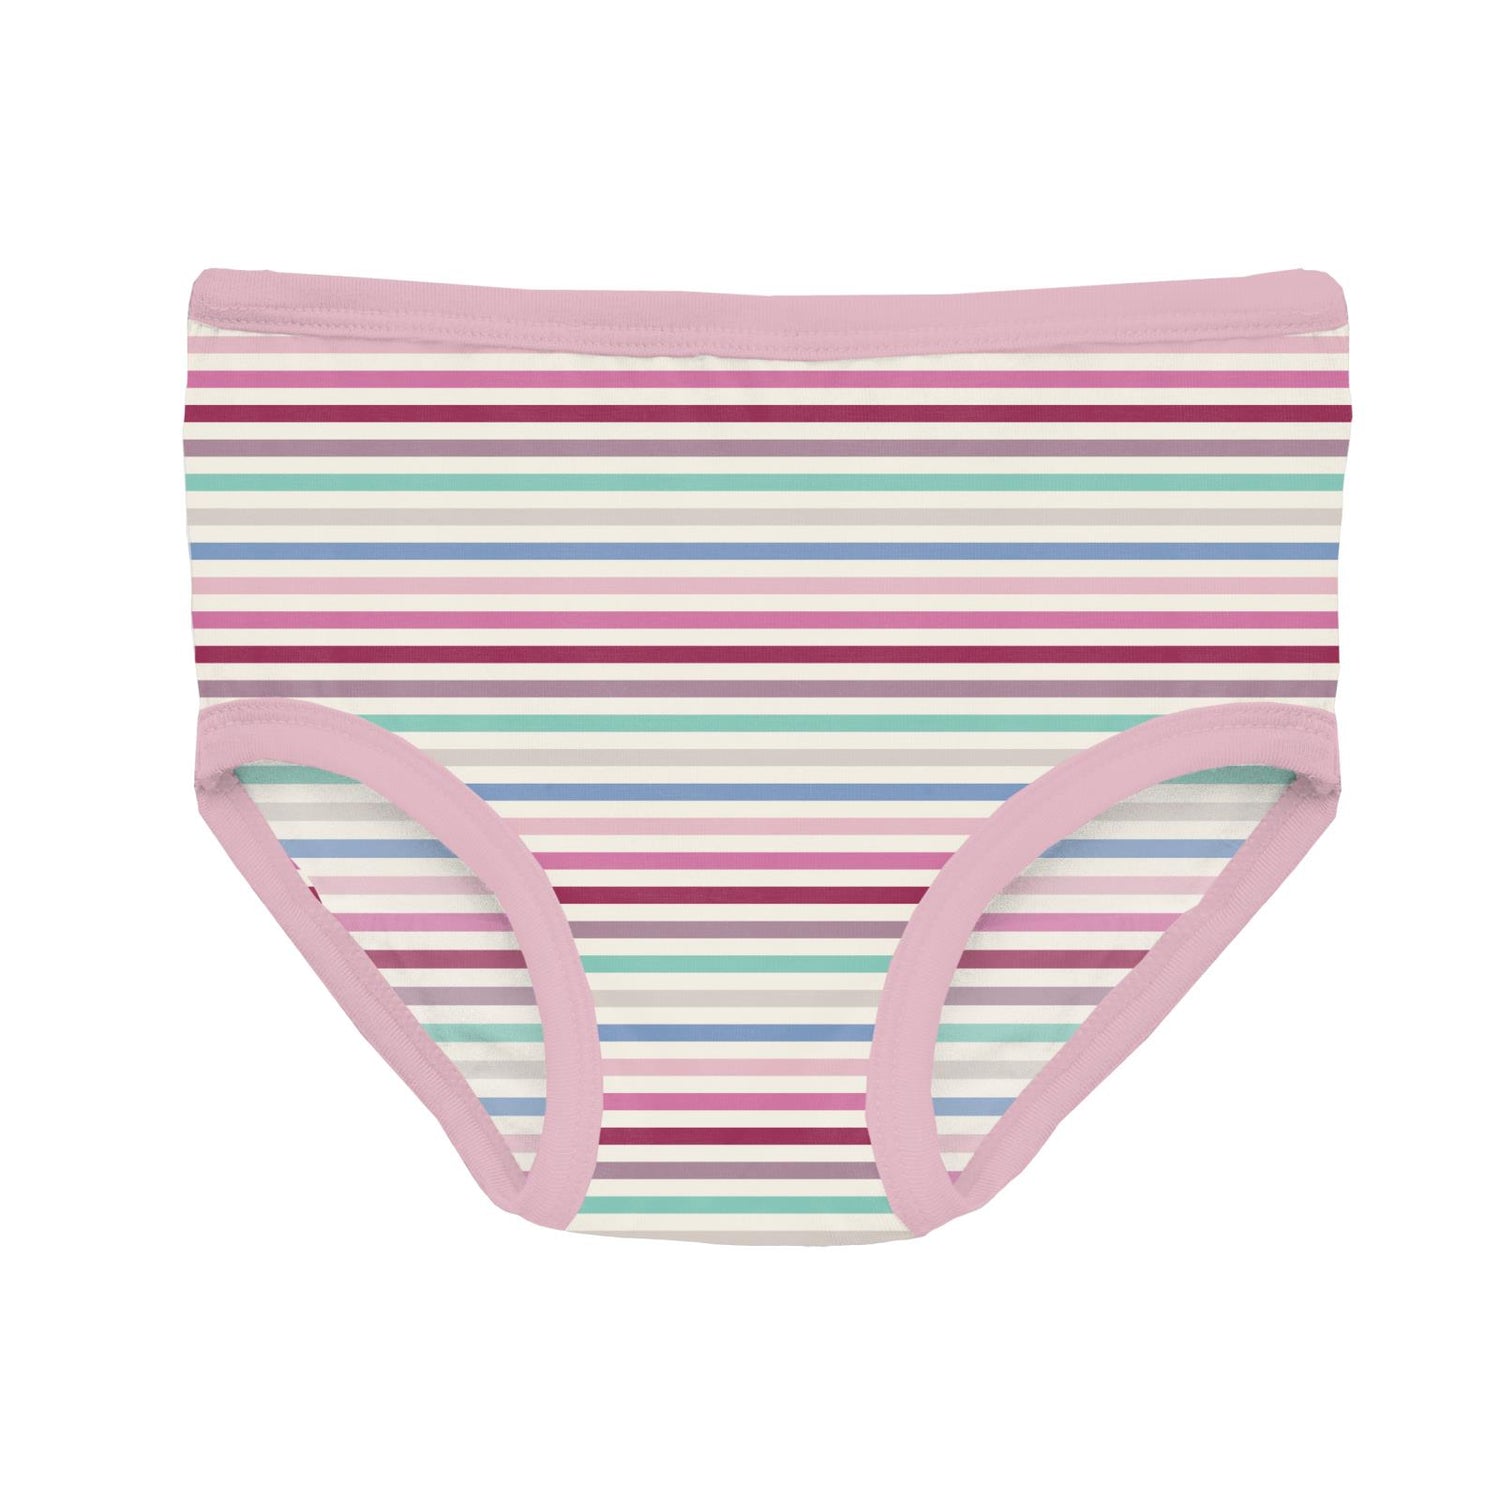 Print Girl's Underwear Set of 3 in Dew Magical Princess, Cake Pop & Make Believe Stripe